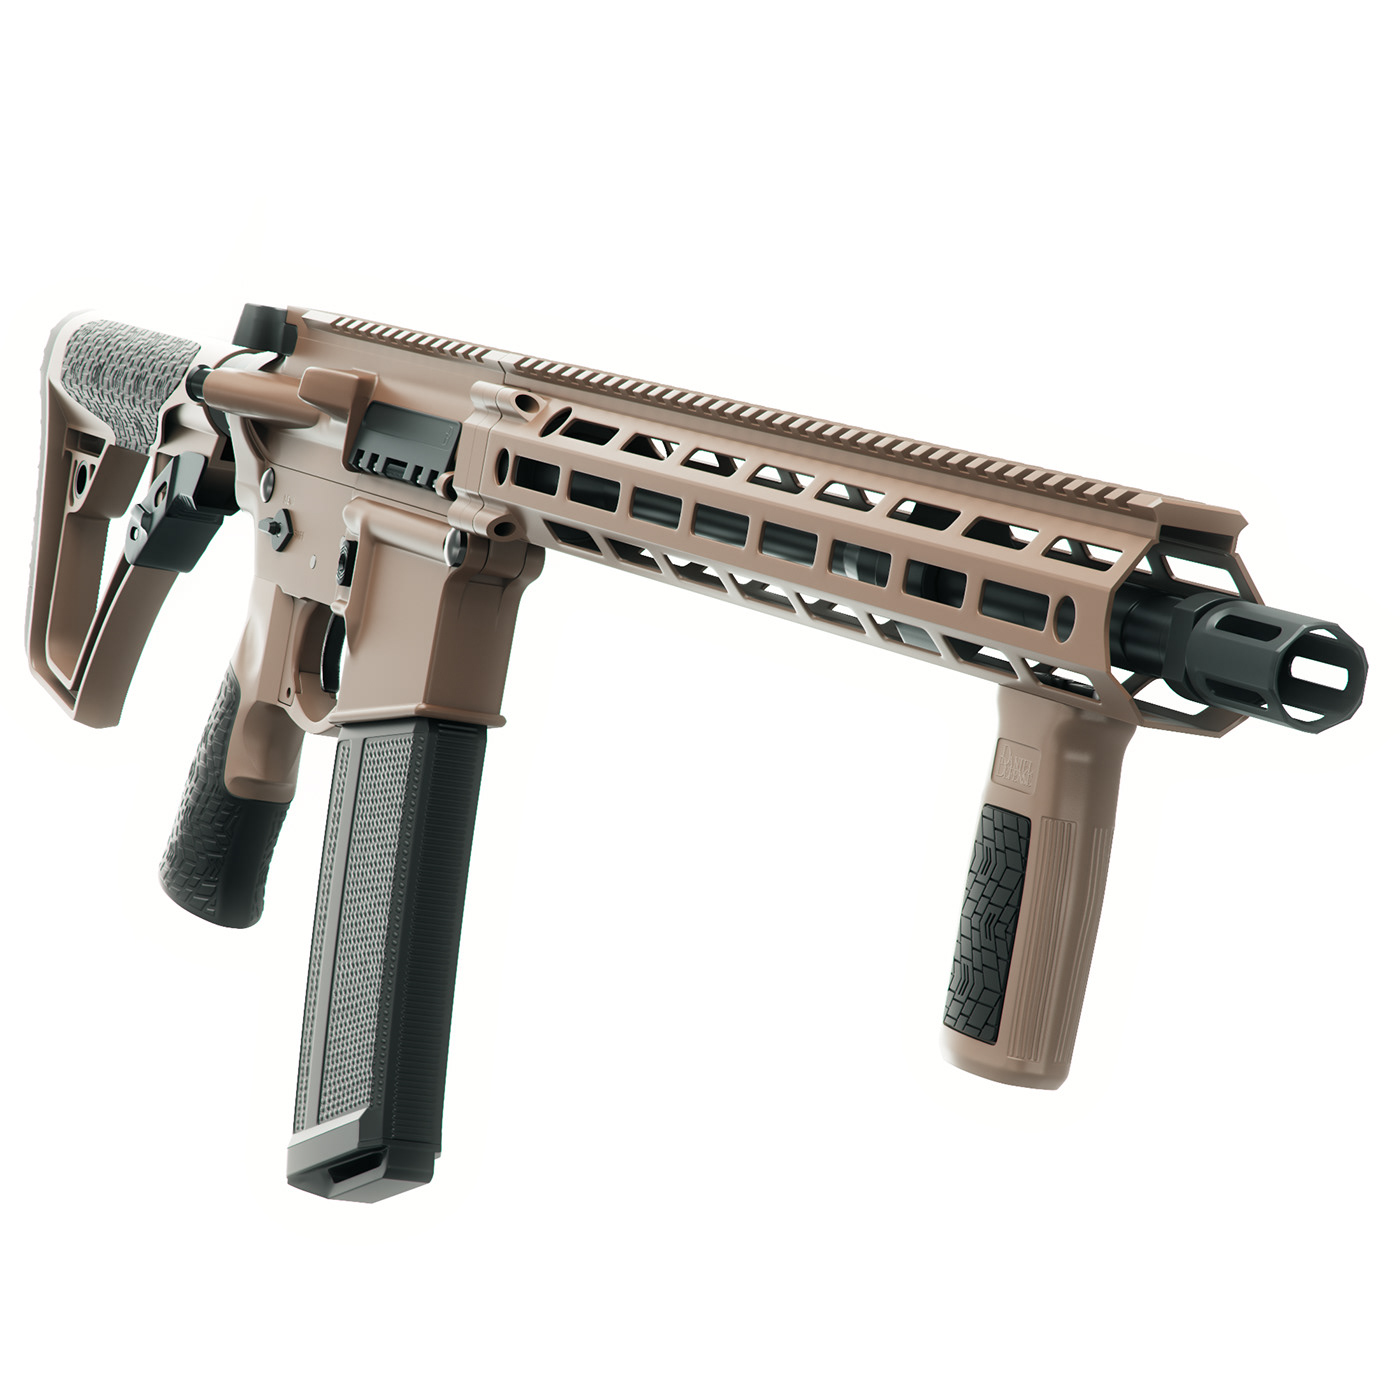 3D model Ammunition DanielDefense DDM4V7 firearm Gun Military projectile protection sniper rifle 